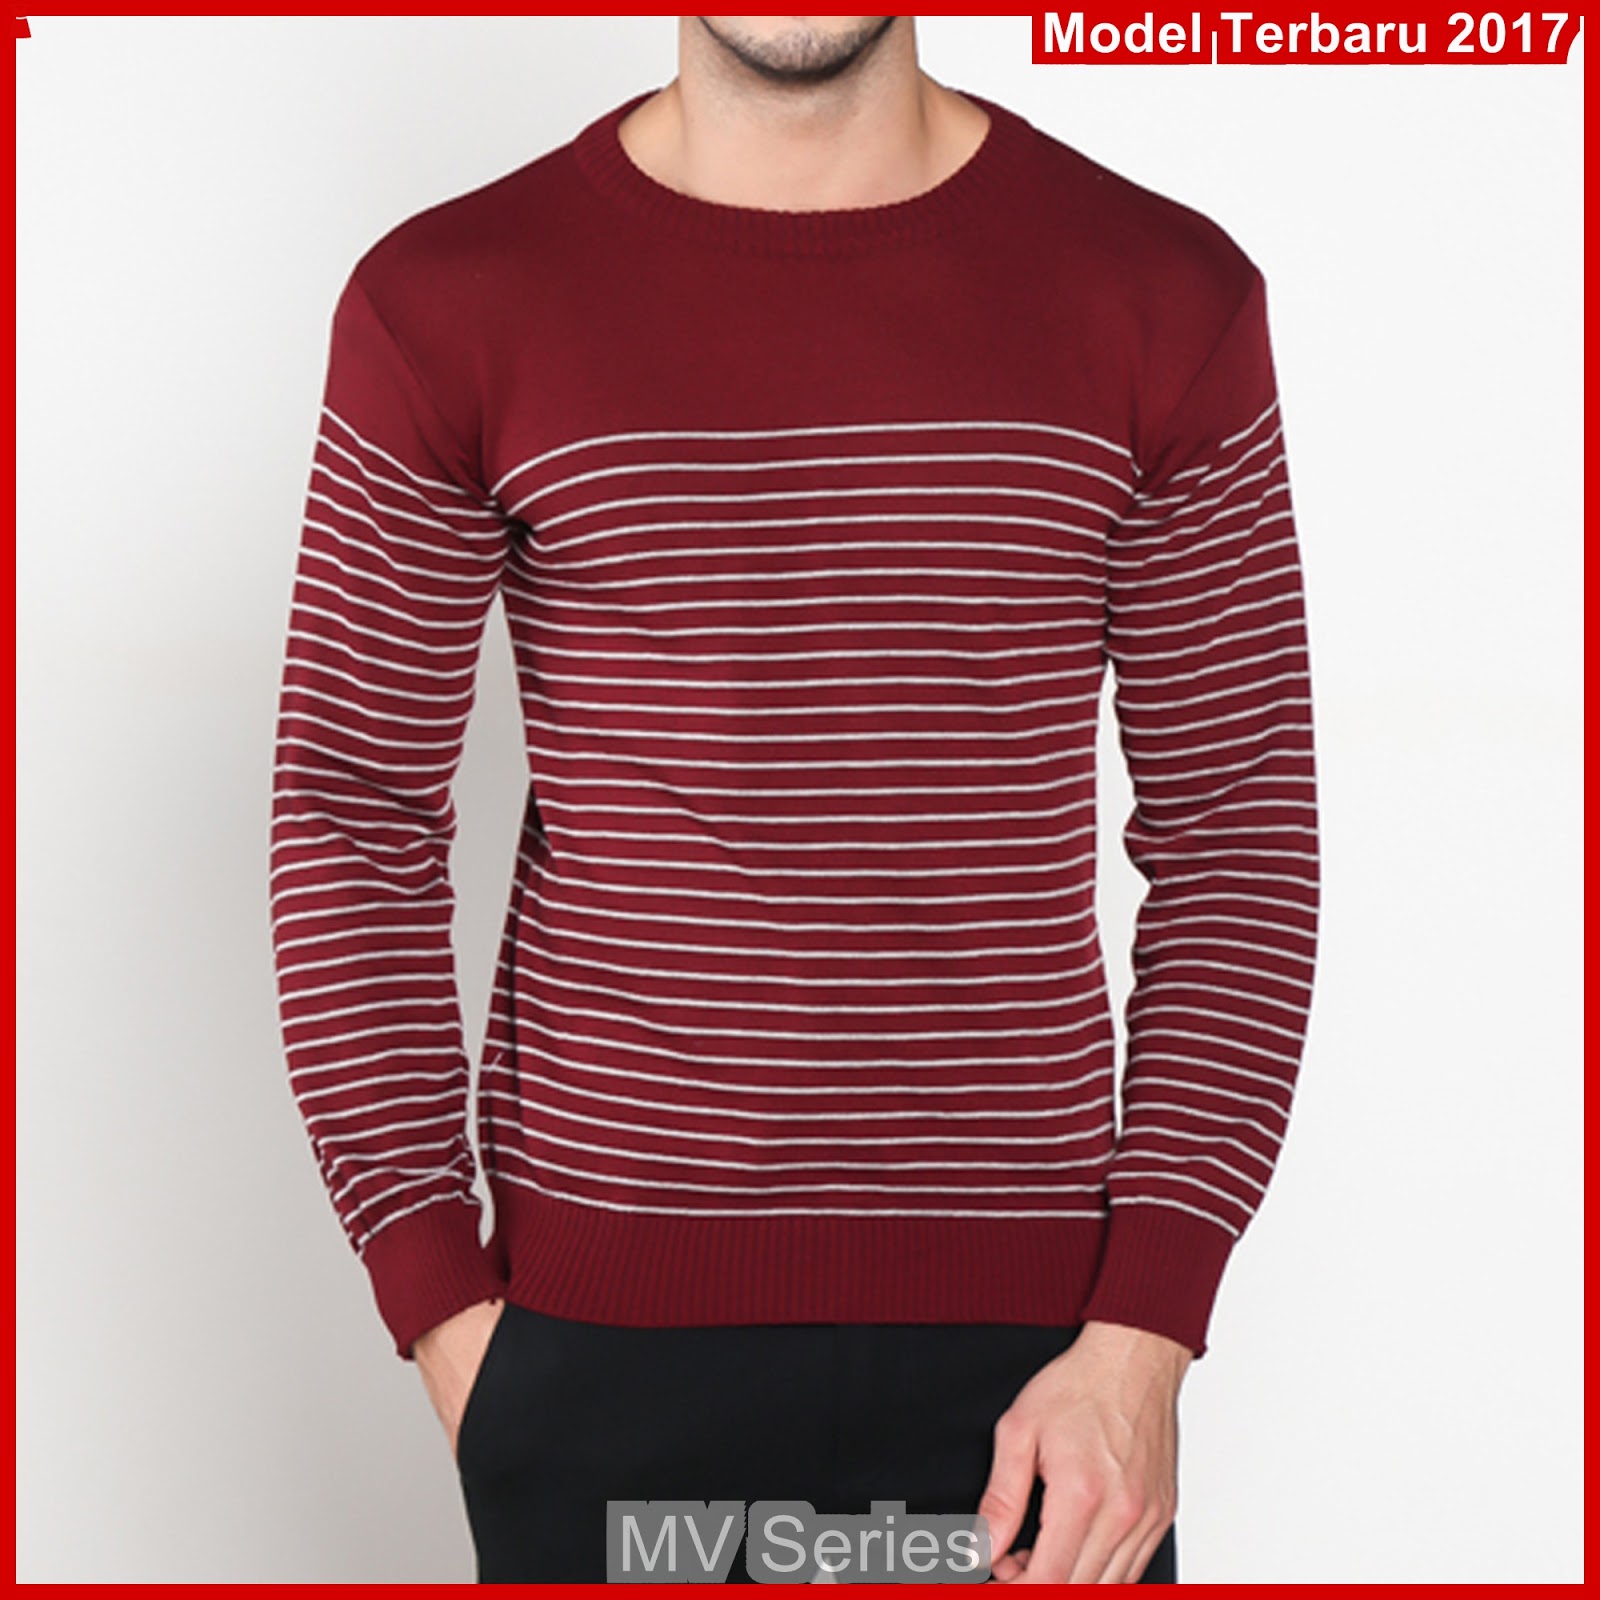 MV061 1 Sweater Rajut Panjang Merah Terbaru BMGShop